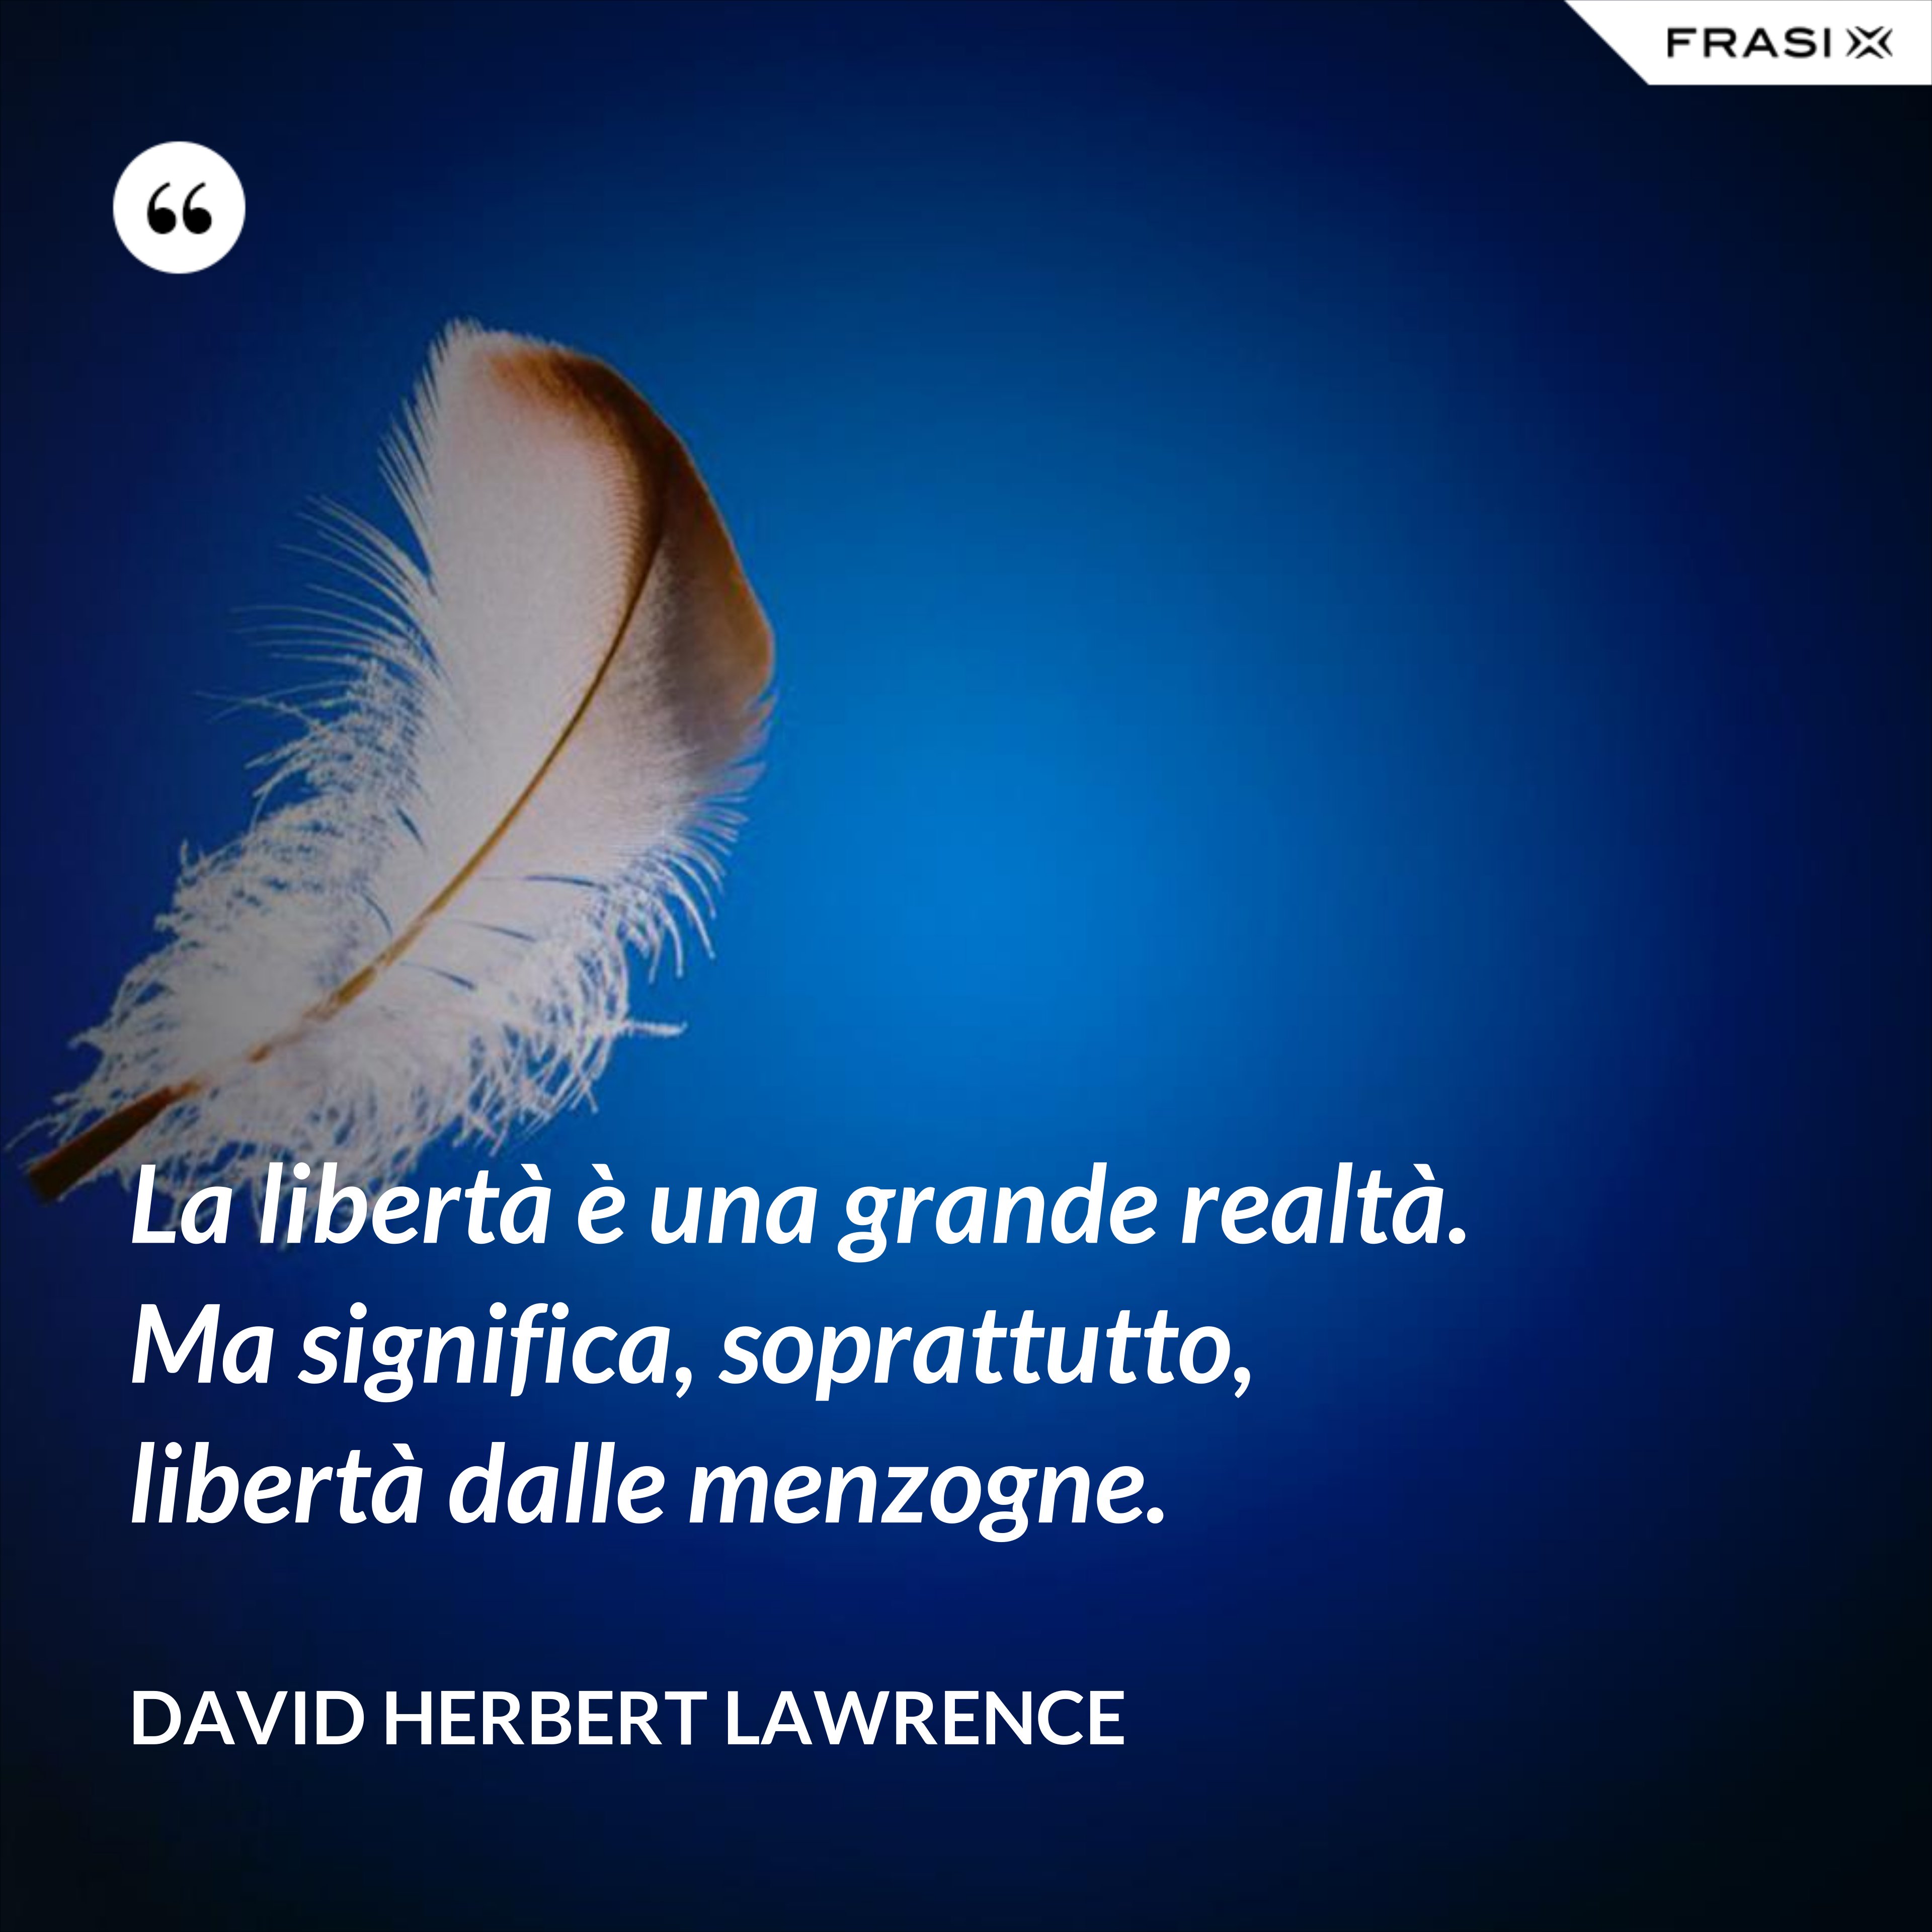 La libertà è una grande realtà. Ma significa, soprattutto, libertà dalle menzogne. - David Herbert Lawrence